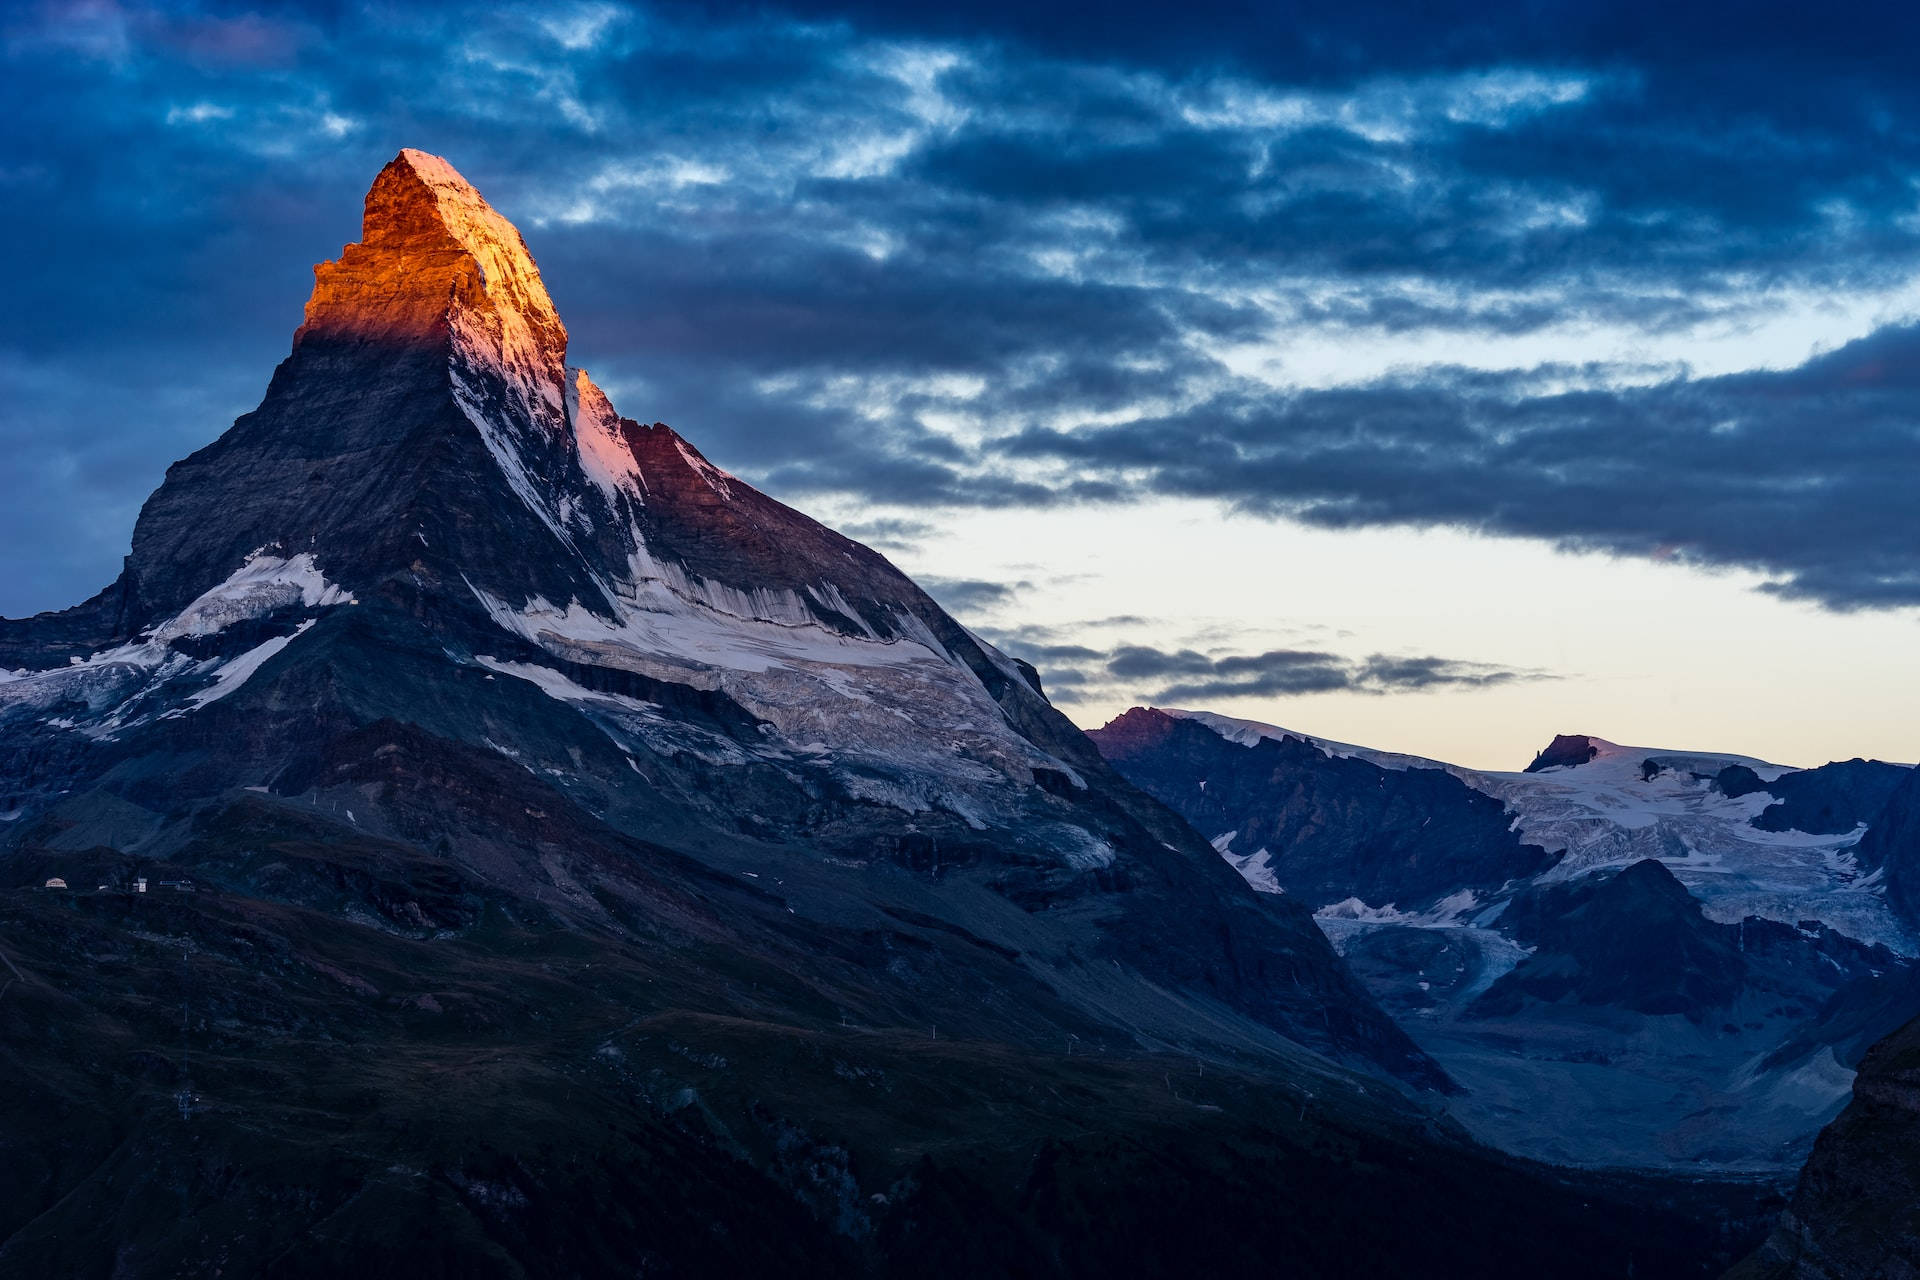 Macbookcon Fondo De Pantalla De La Montaña Matterhorn. Fondo de pantalla